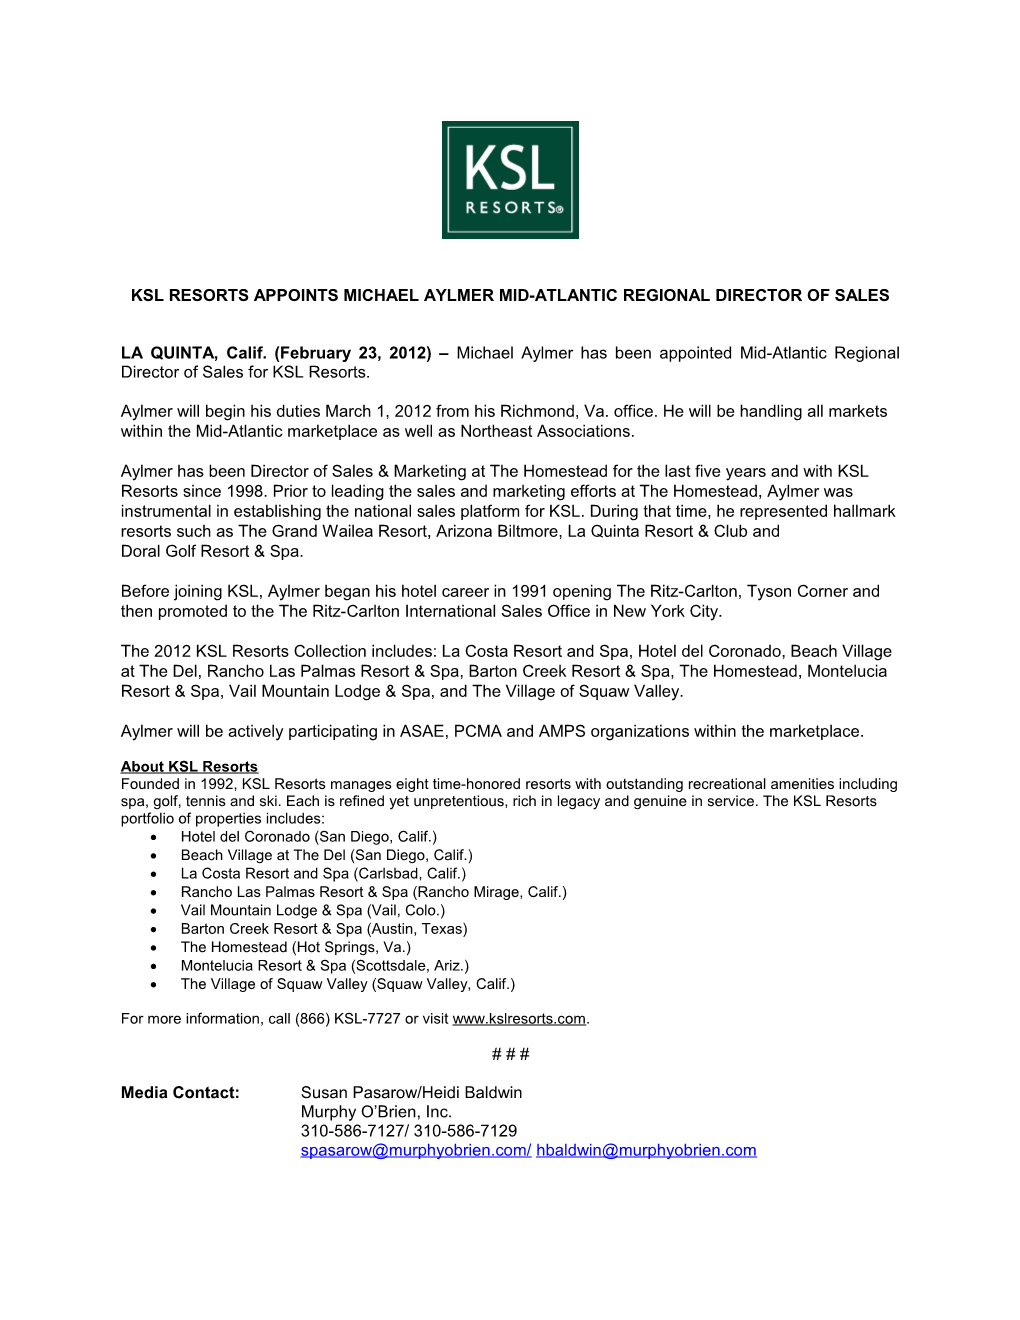 Ksl Resorts Appoints Michael Aylmer Mid-Atlantic Regional Director of Sales